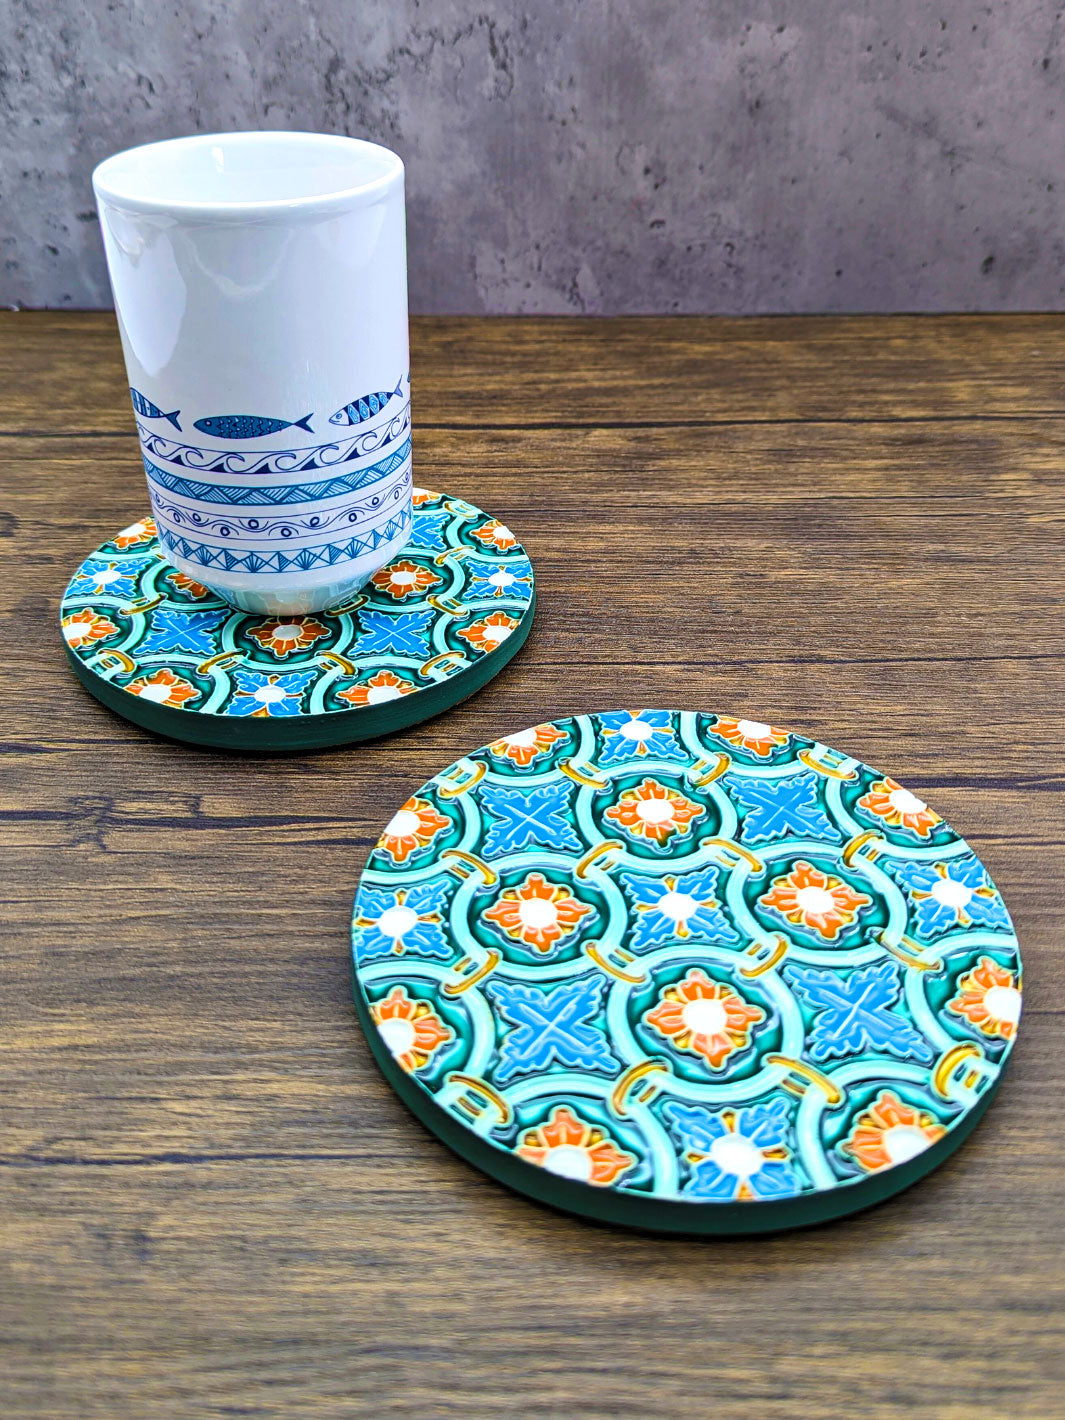 Hand painted Portuguese Ceramic Tile Round Coaster - Set of 2